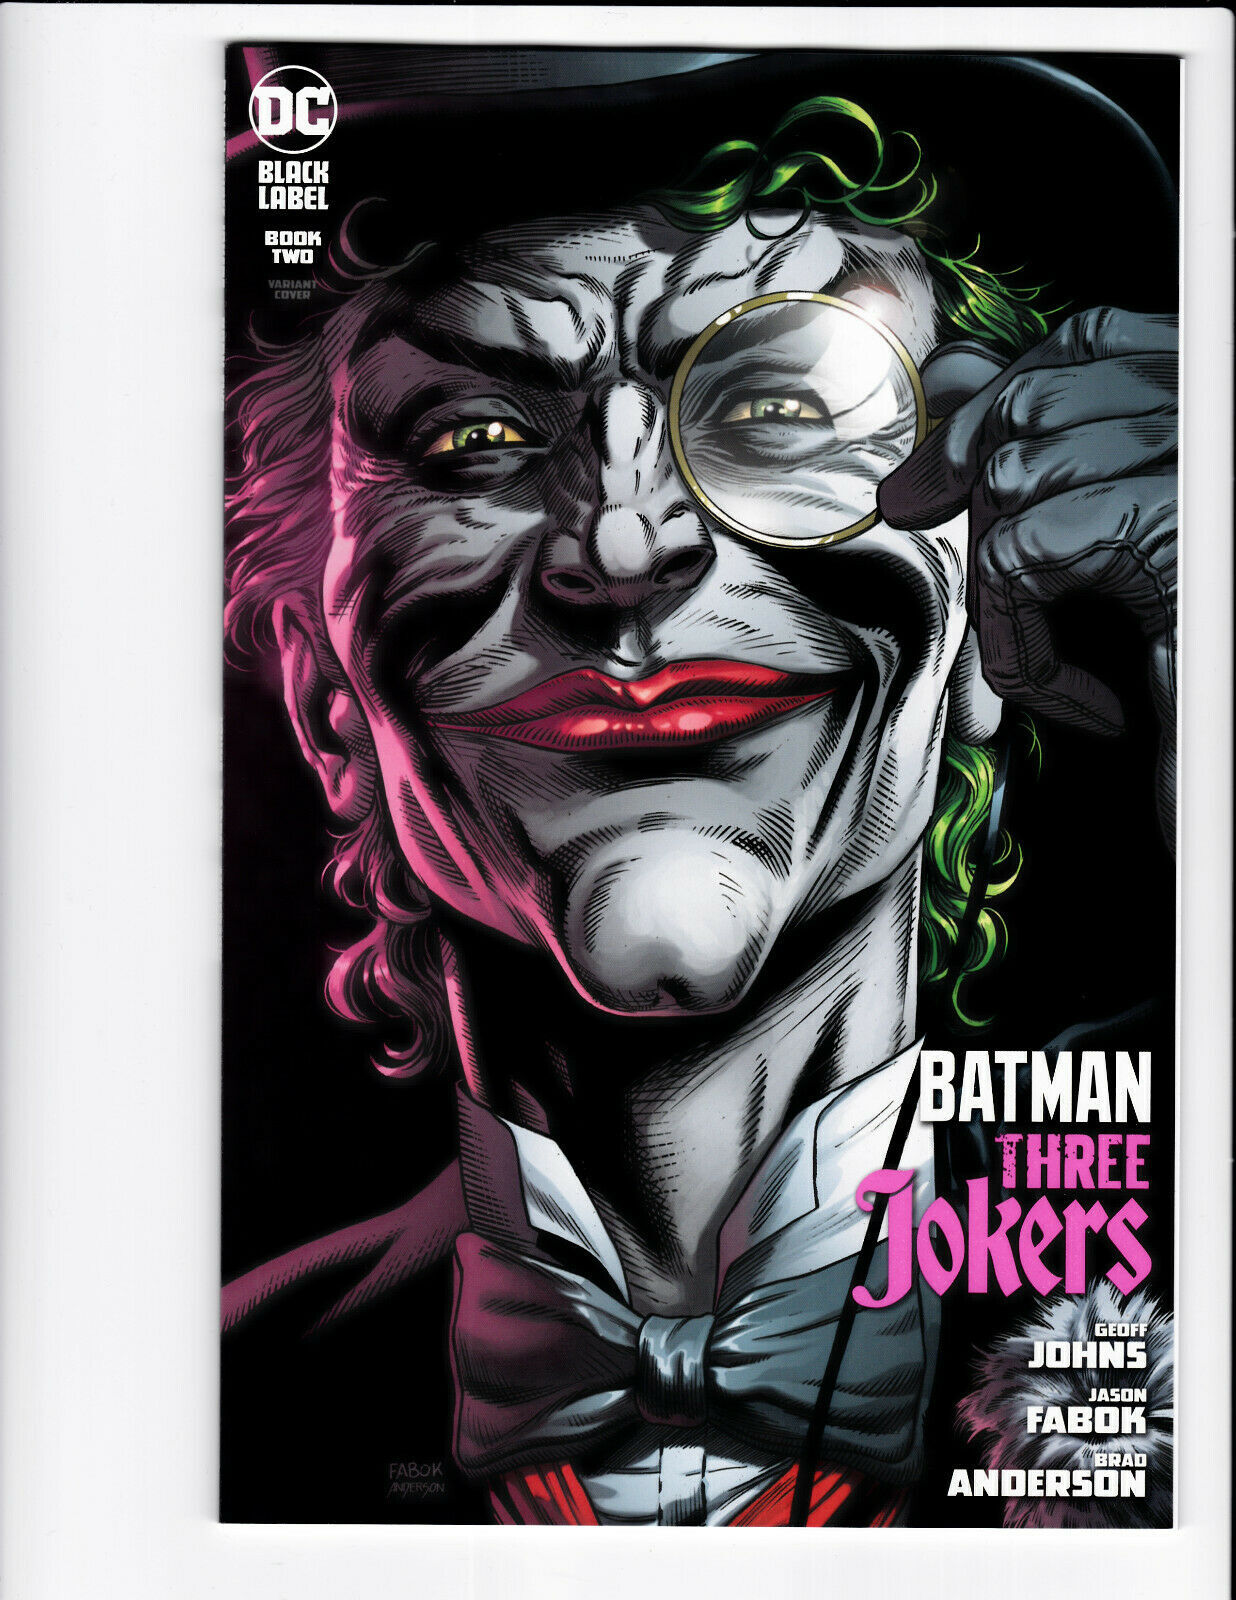 Batman Three Jokers #2 2020 Unread Jason Fabok Main Cover DC Comics Black Label